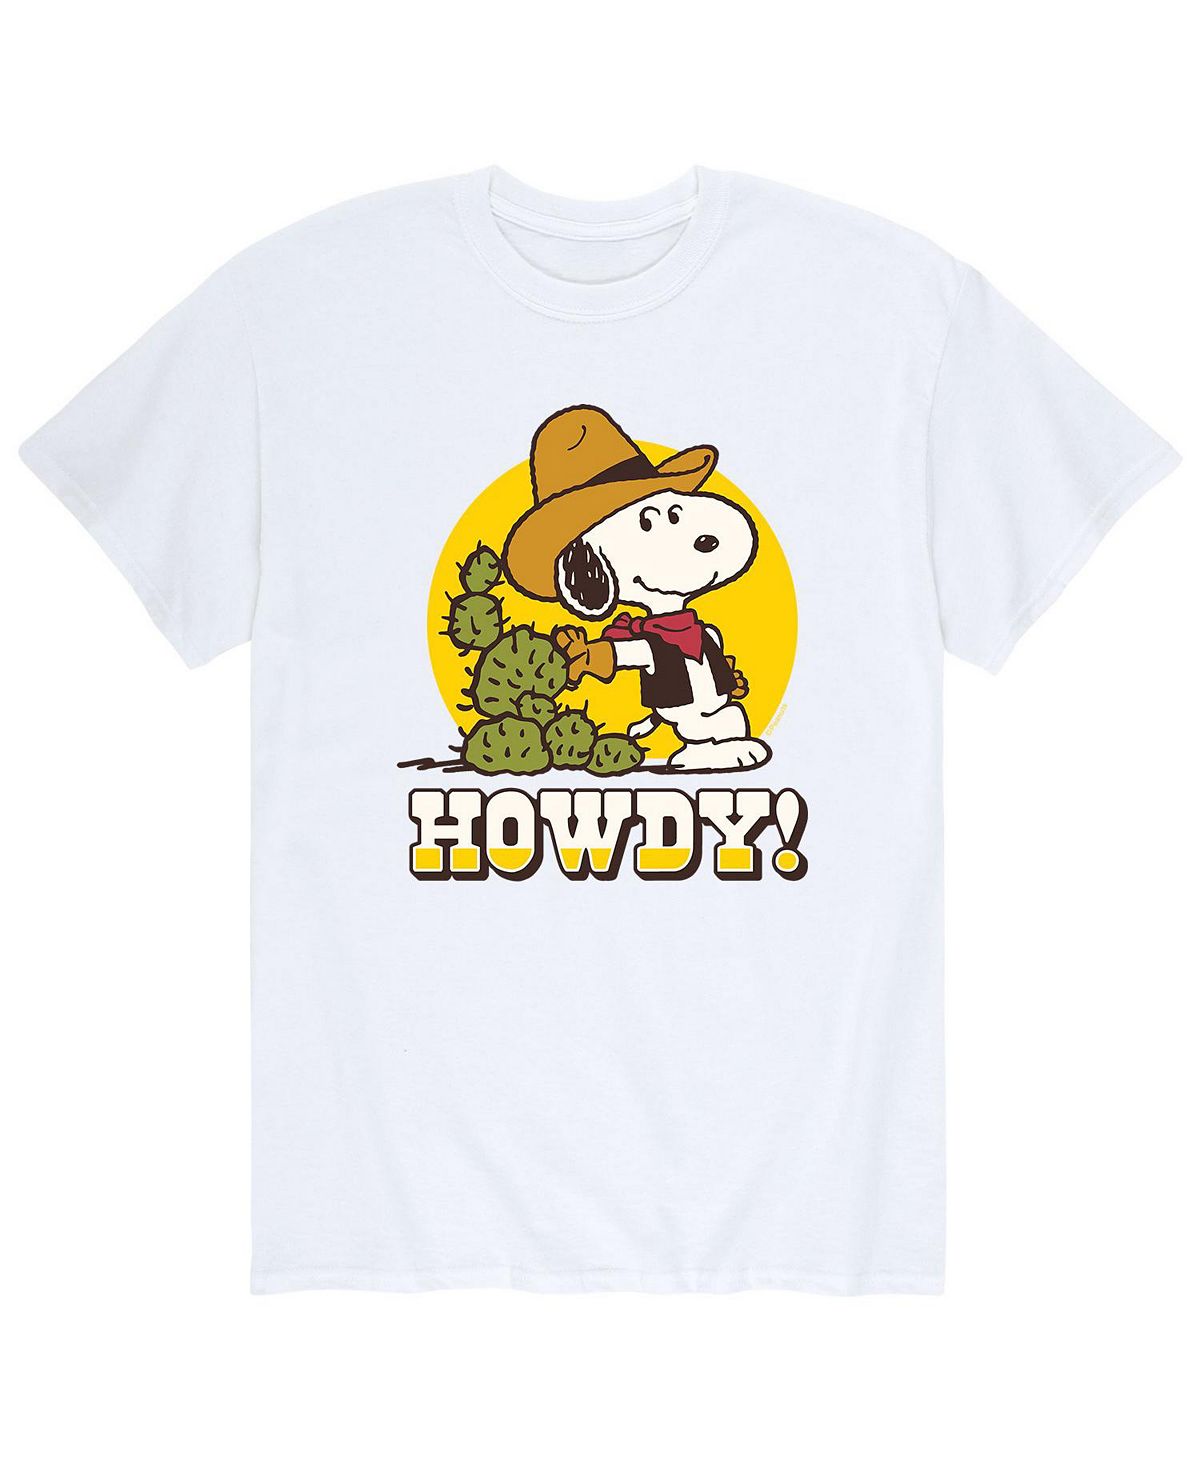 Мужская футболка Peanuts Howdy AIRWAVES